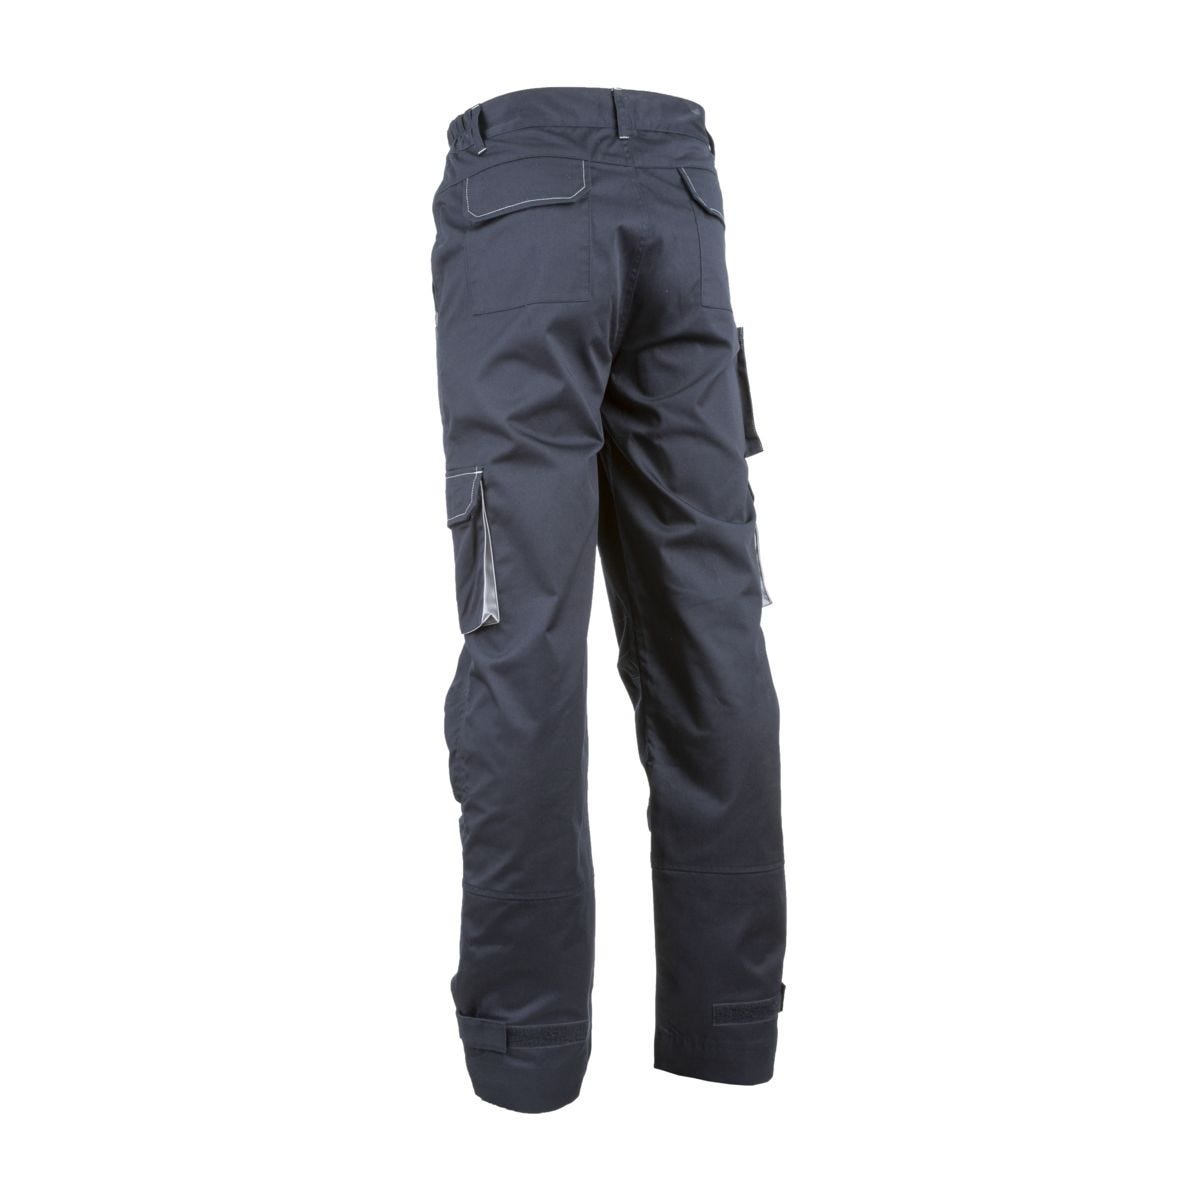 Pantalon NAVY II marine/gris - COVERGUARD - Taille L 1